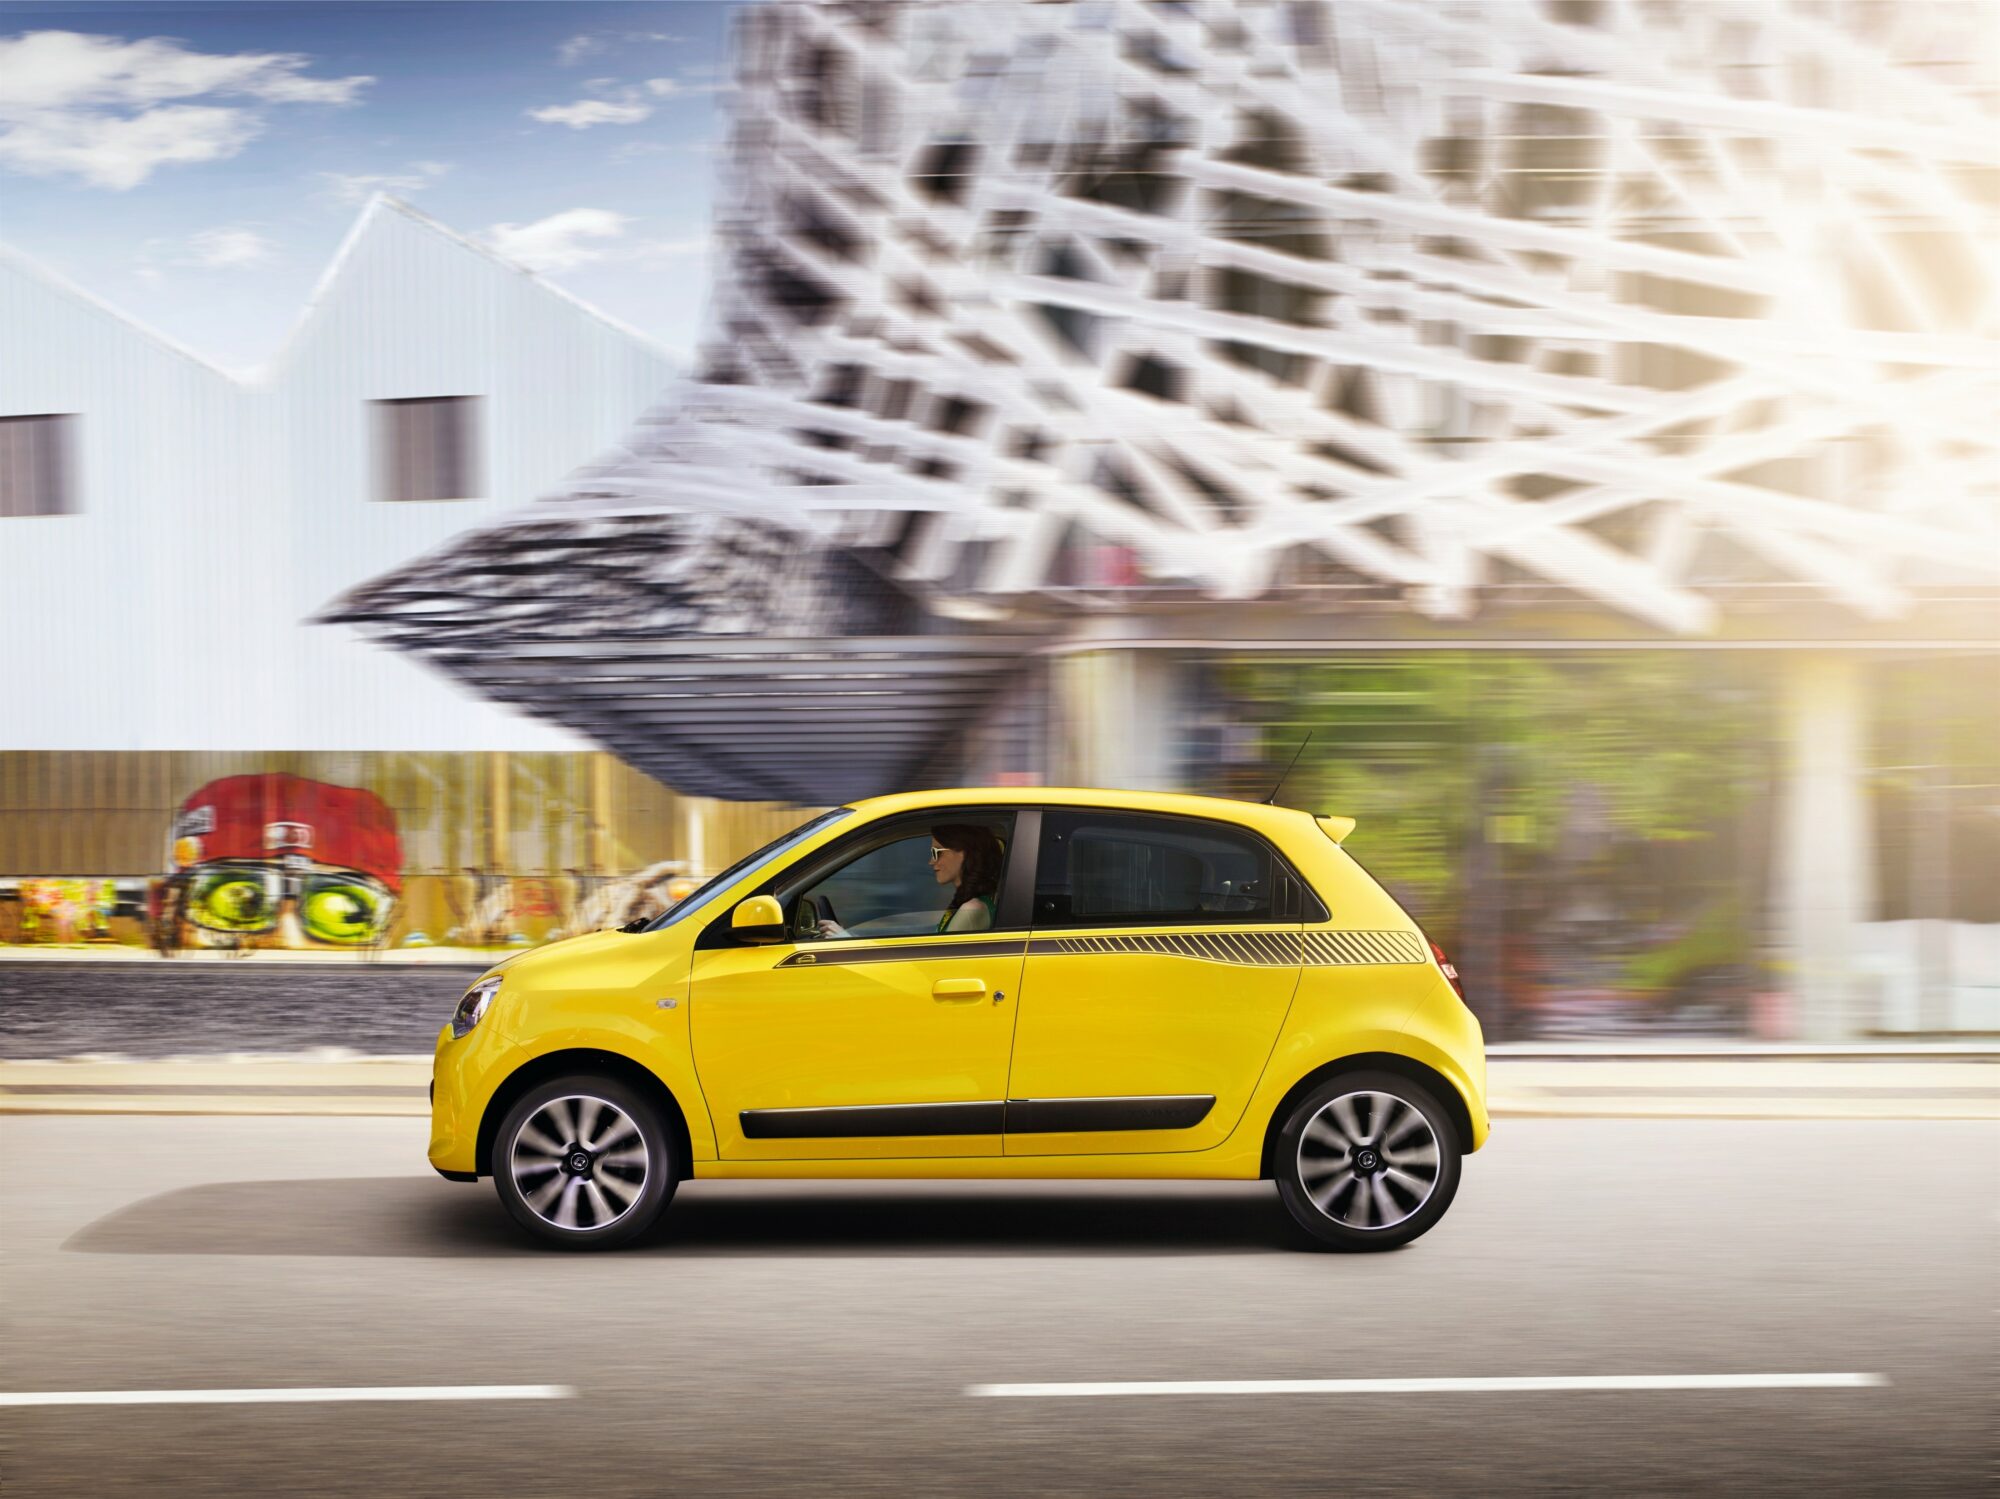 2014 - Nuova Renault Twingo